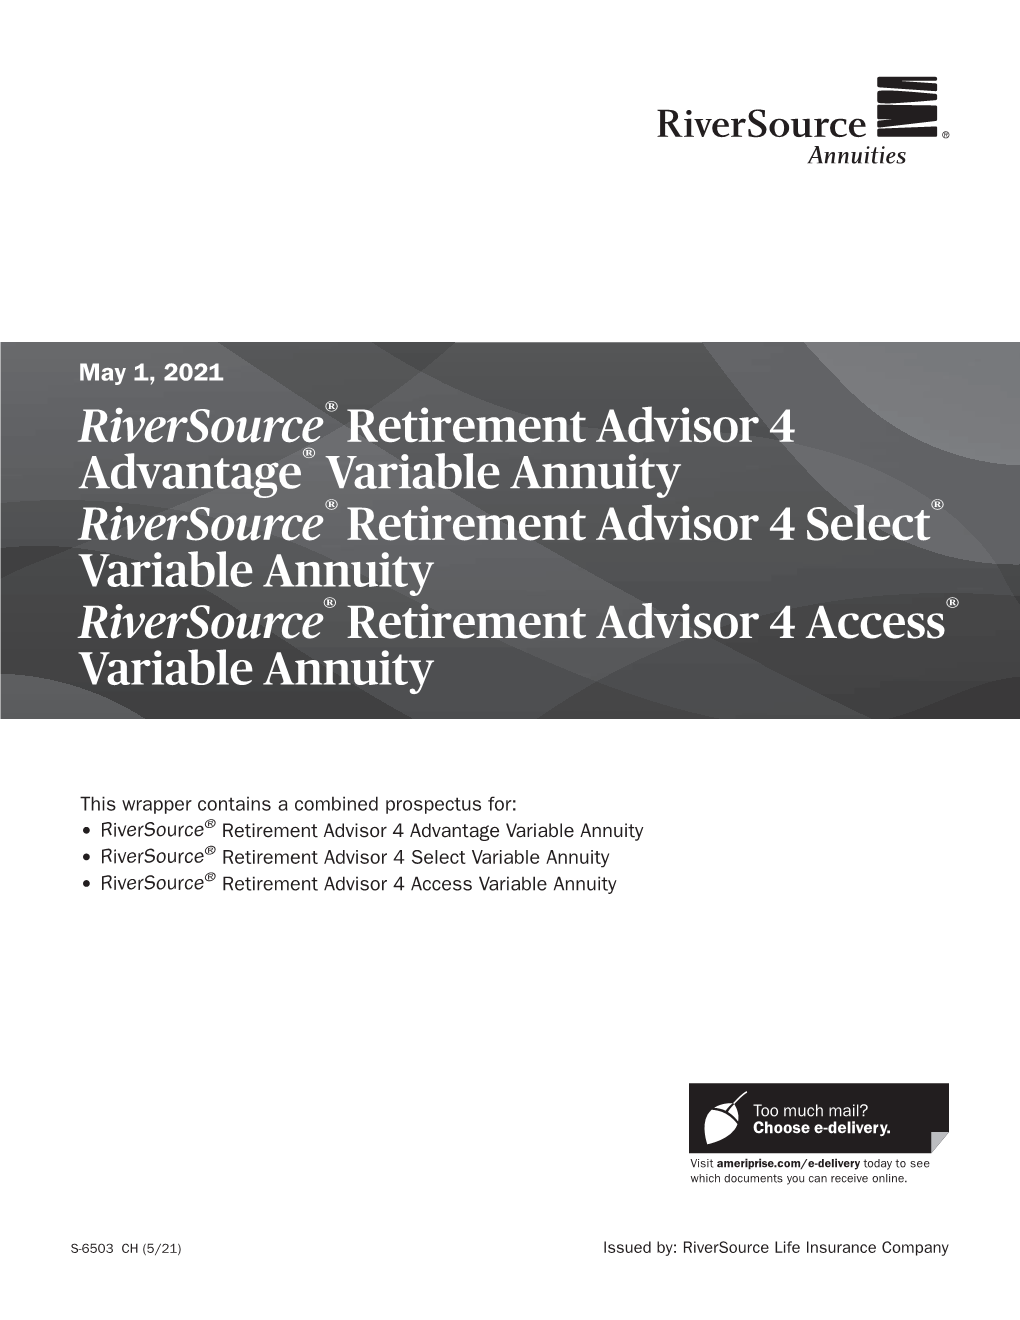 Riversource Retirement Advisor 4 Advantage Variable Annuity